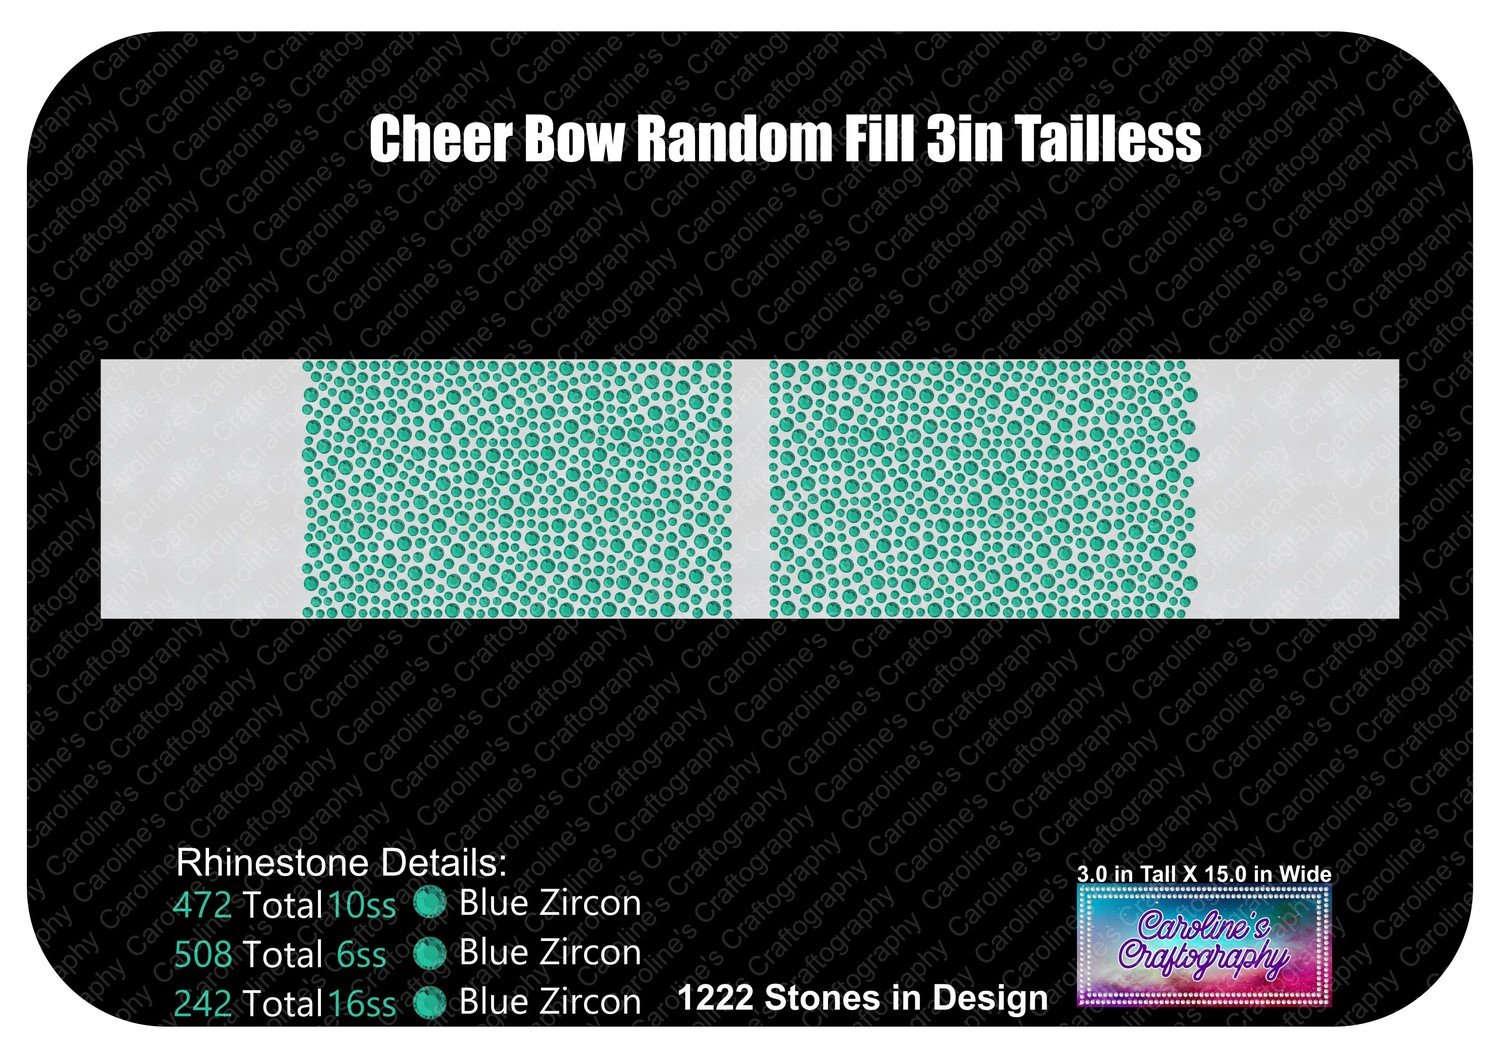 Tailless Cheer Bow Random Multi Fill 3in Rhinestone